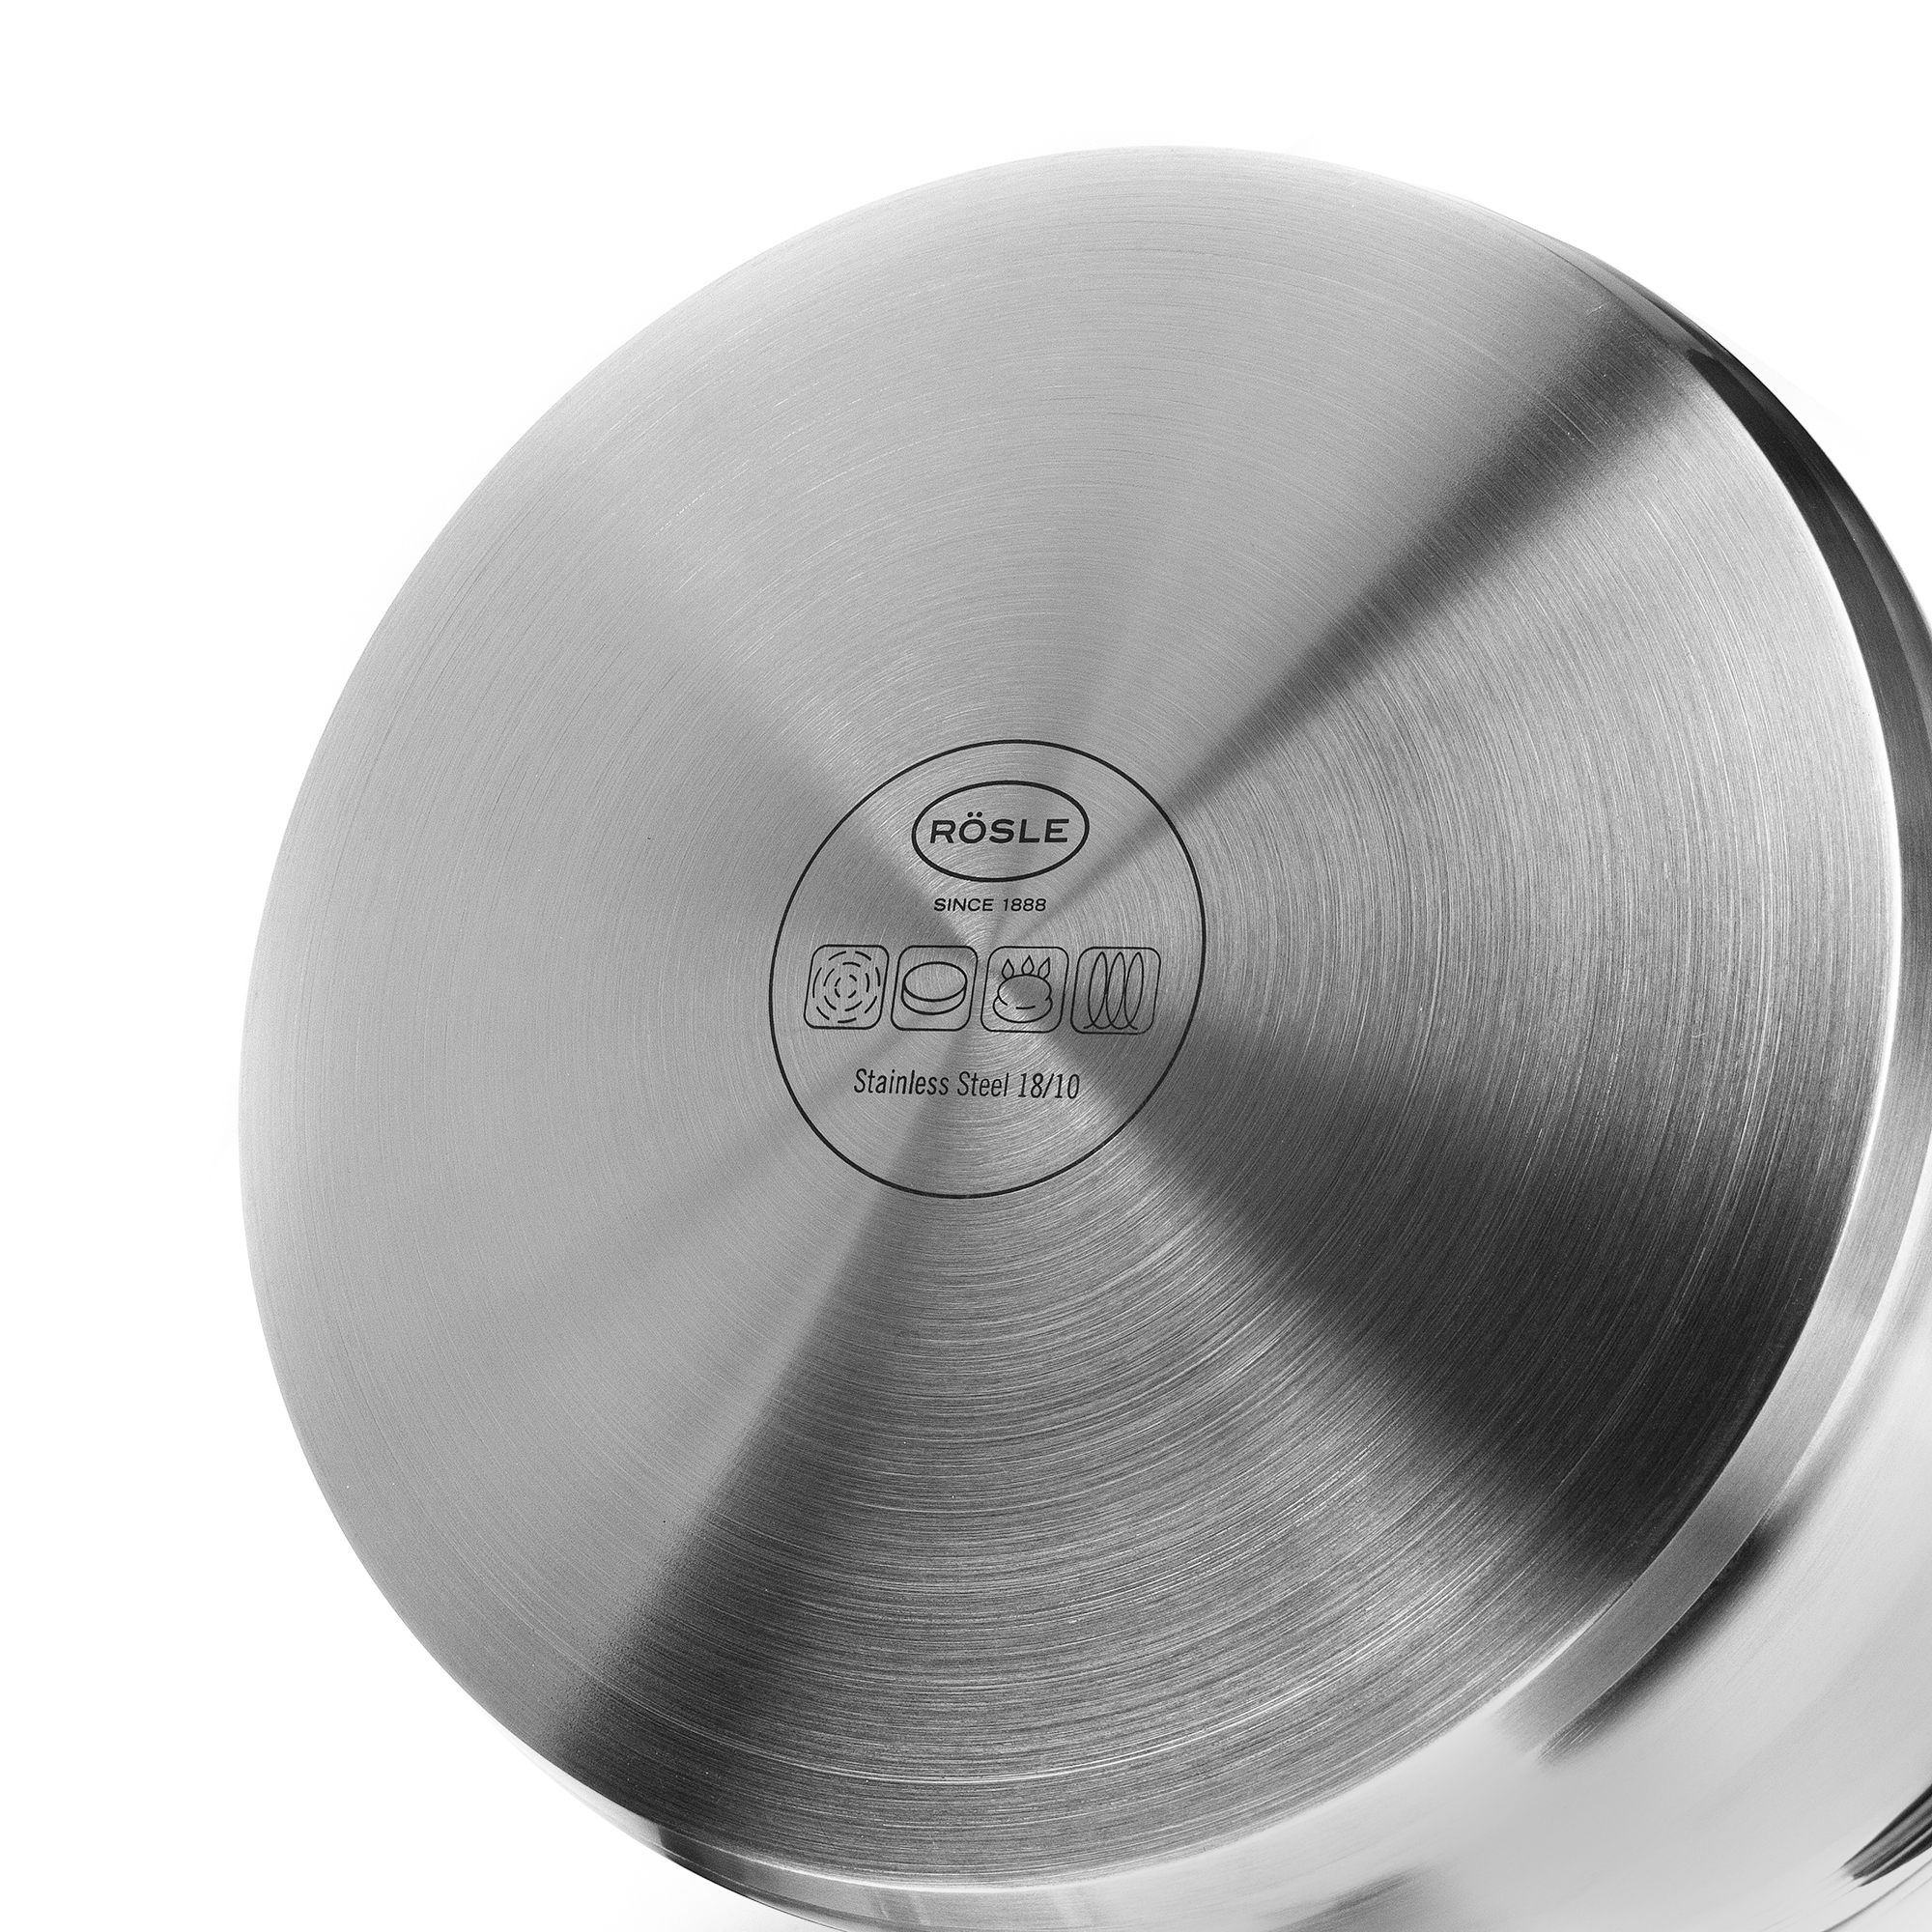 Кастрюля с крышкой Roesle Expertiso диаметр 24 см 5,8 л, цвет серебристый - фото 6